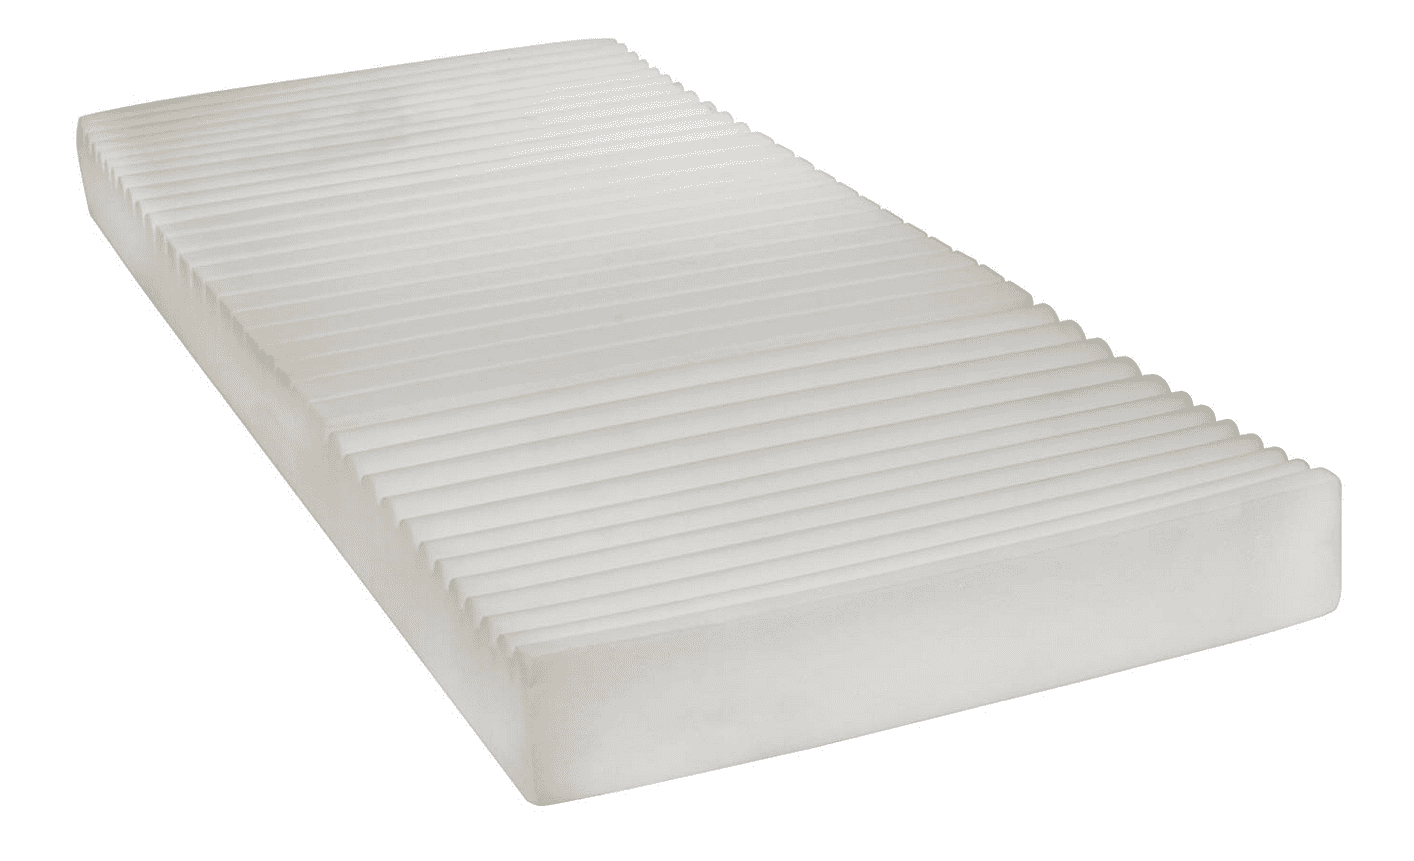 therapeutic warming mattress cover